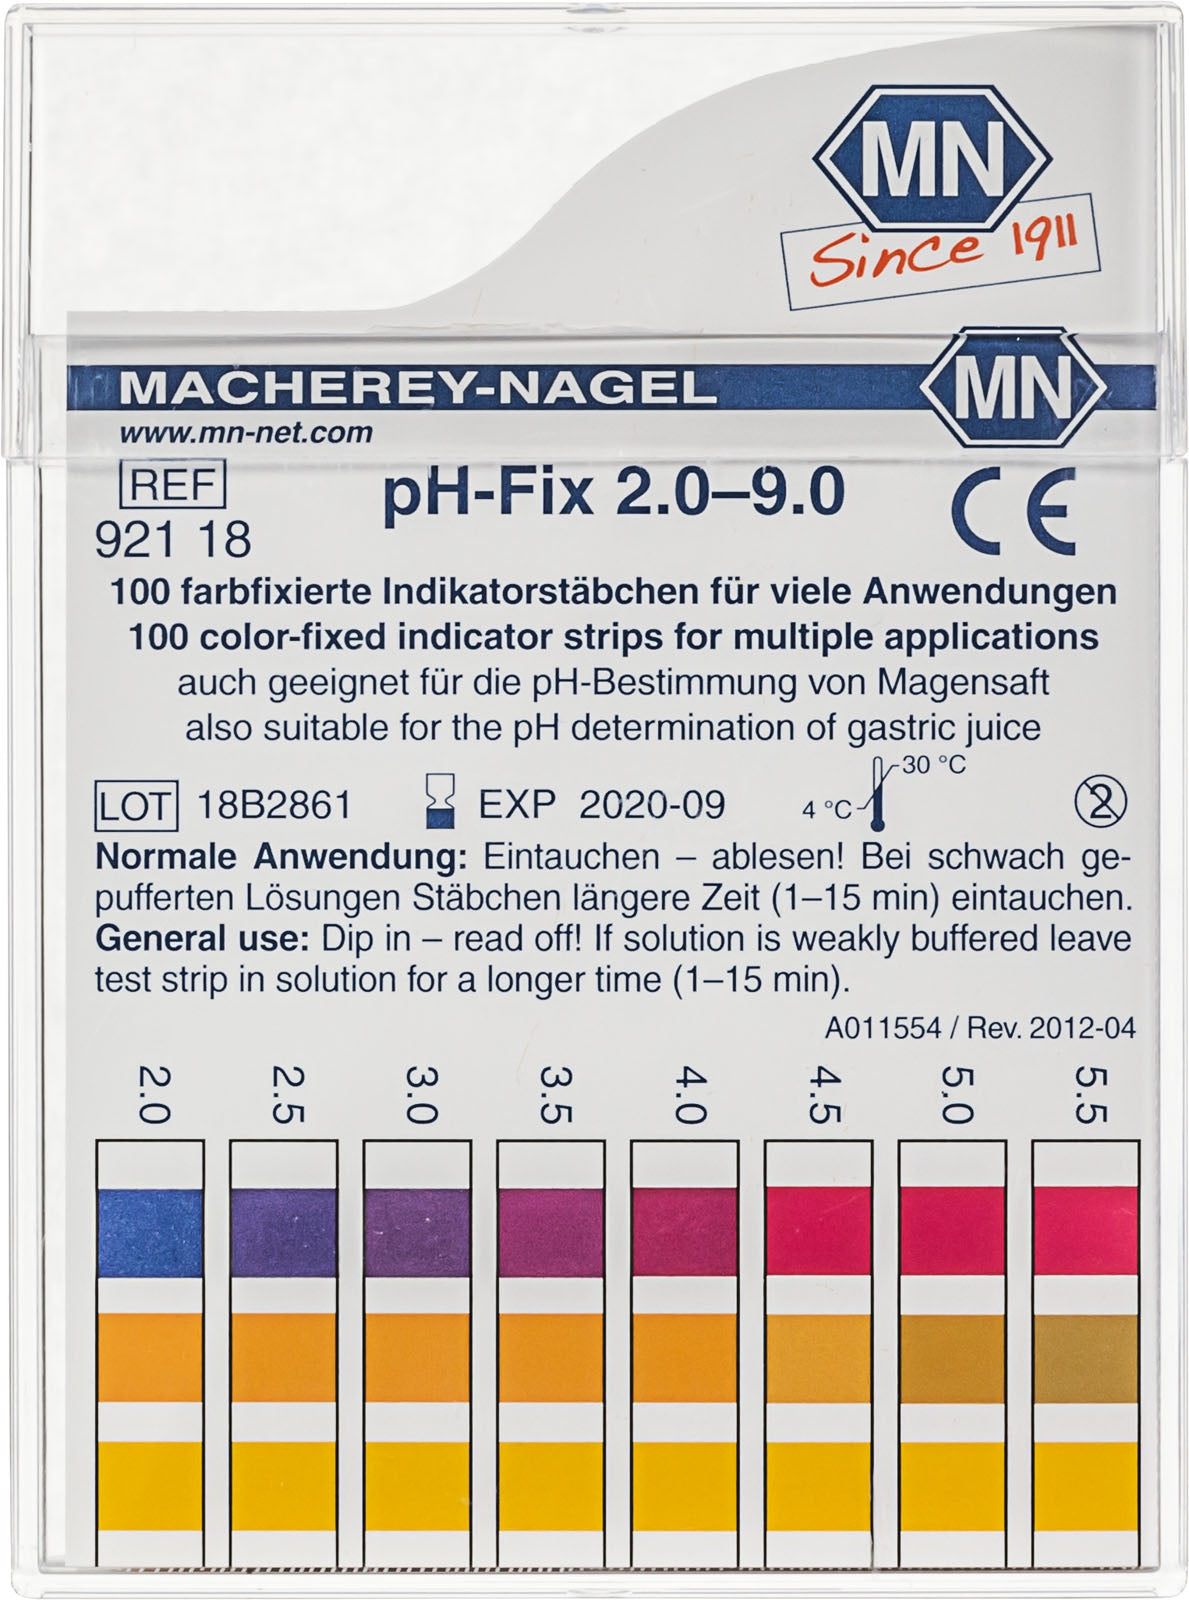 pH test strips, pH-Fix 7.0-14.0, fixed indicator, MN